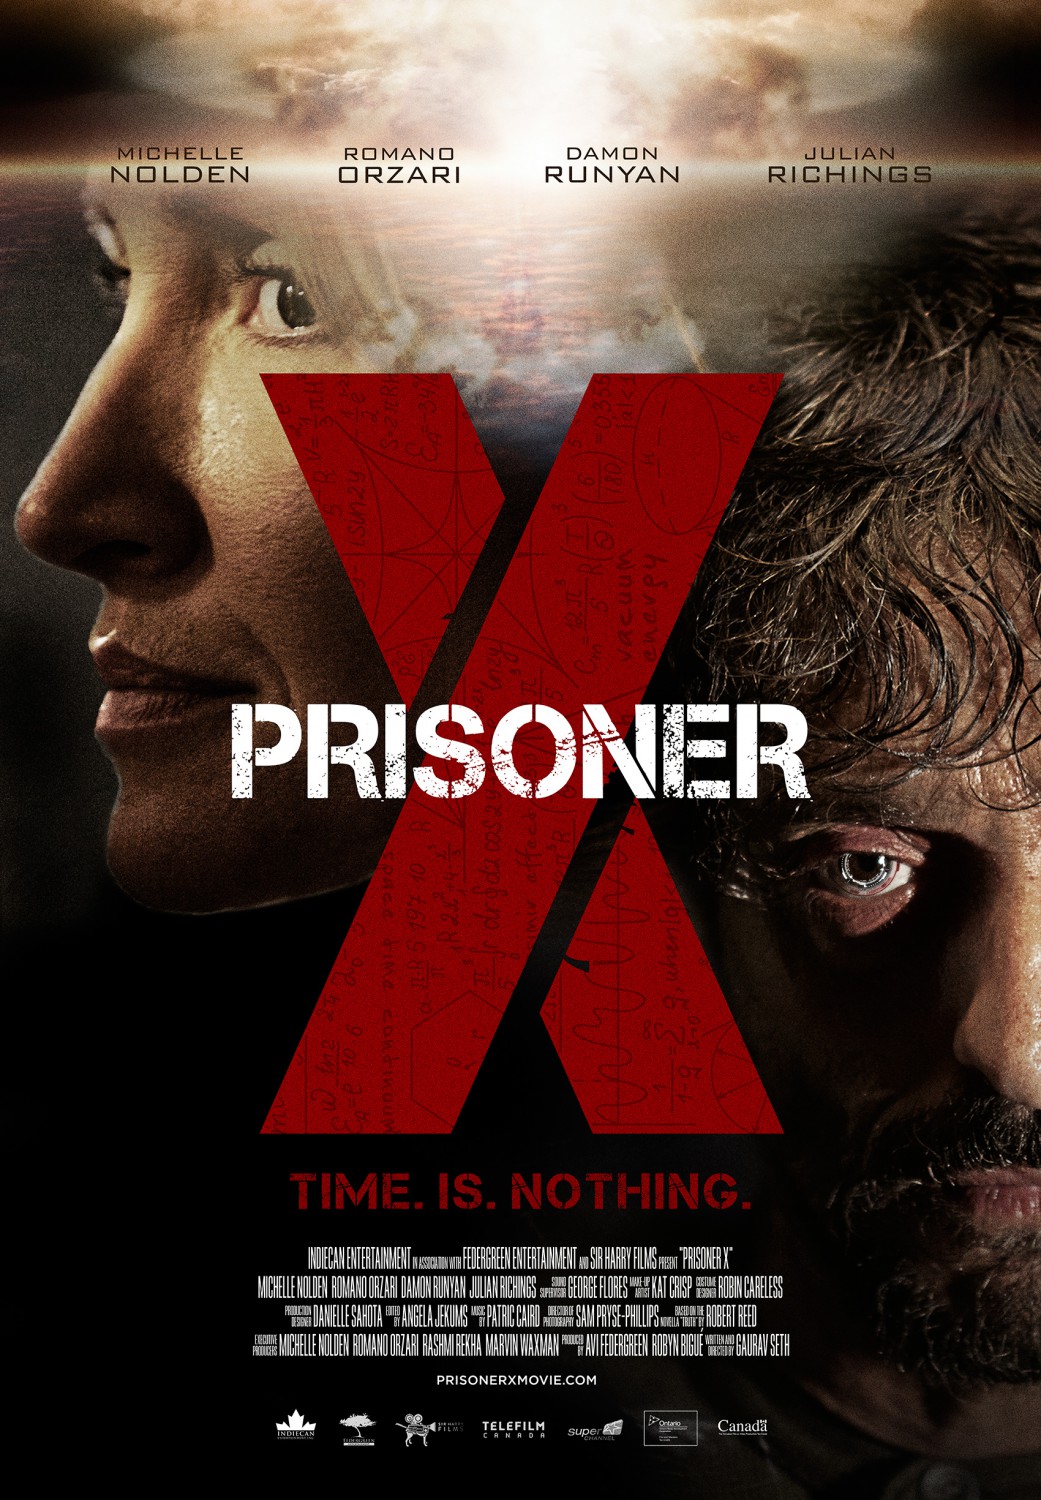 Extra Large Movie Poster Image for Prisoner X 